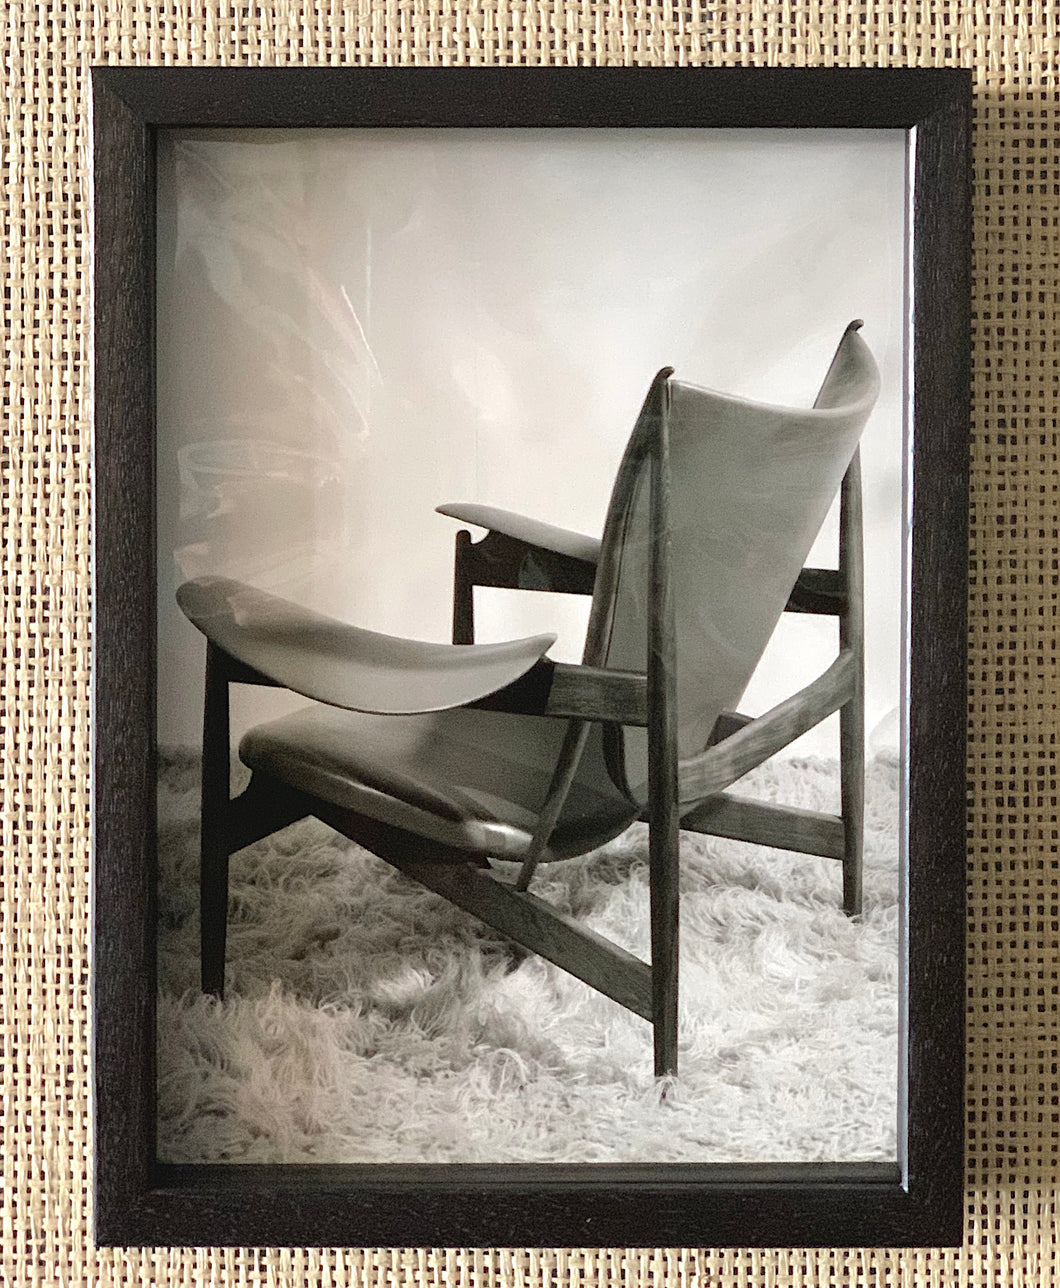 Finn Juhl Chieftan chair - original vintage press photograph